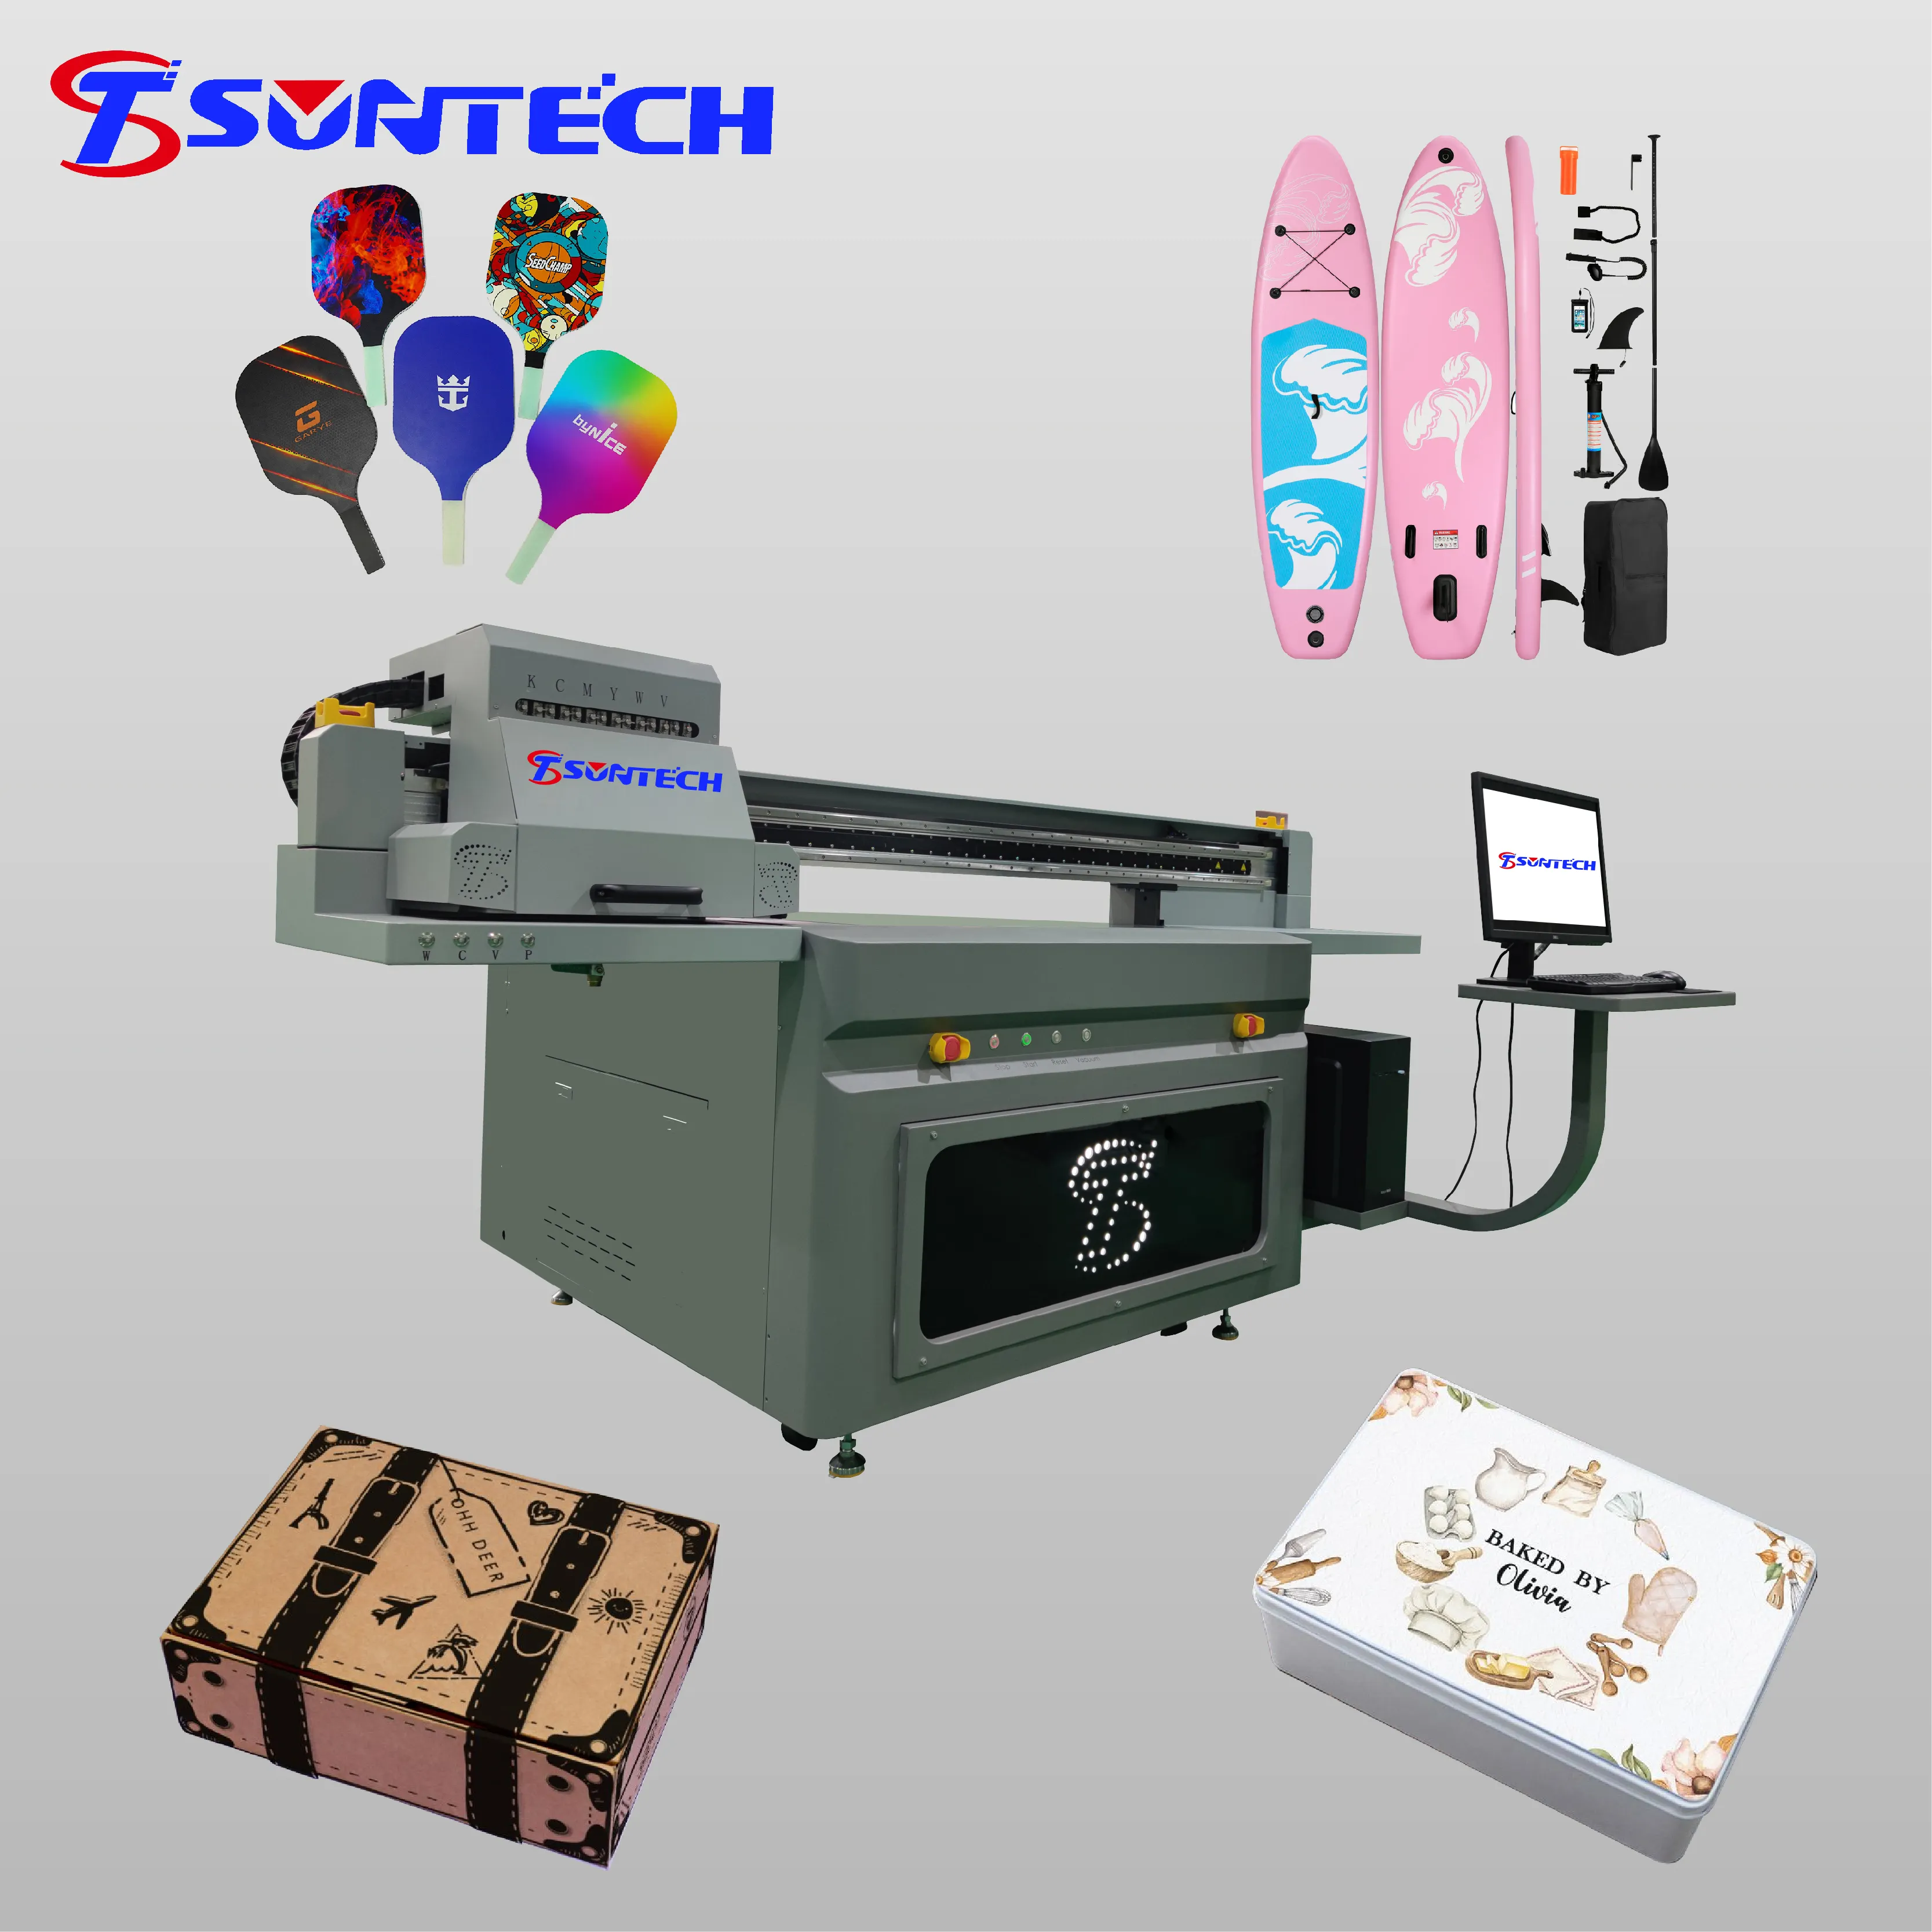 Suntech 9060 Ricoh G5i uv impressora garrafa caneca telefone caso metal uv dtf impressora a1 6090 uv led flatbed impressora